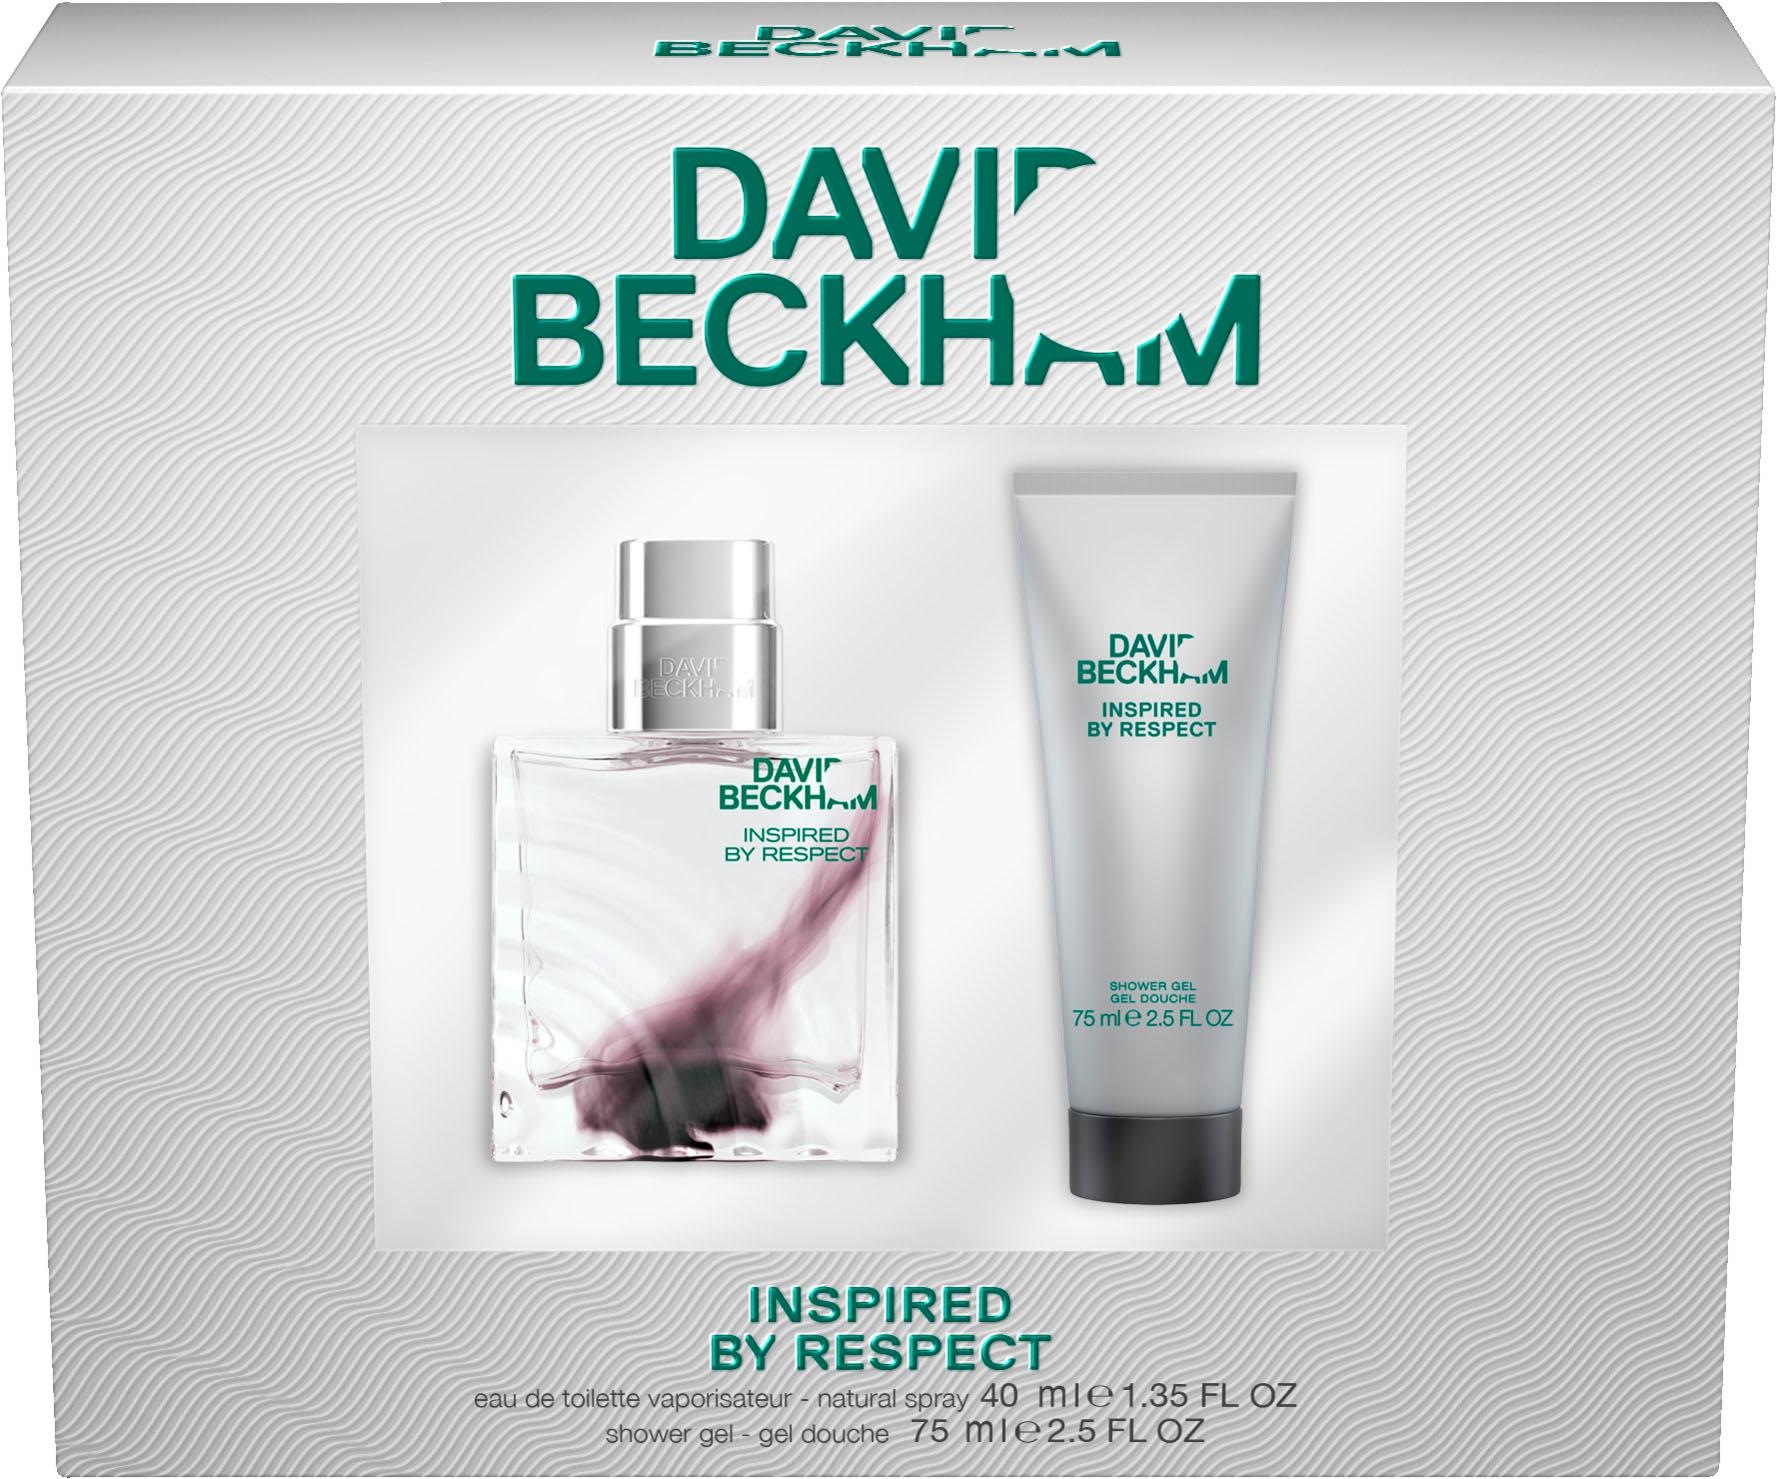 DAVID BECKHAM Duft-Set bequem (2 »Inspired bestellen by Respect«, tlg.)